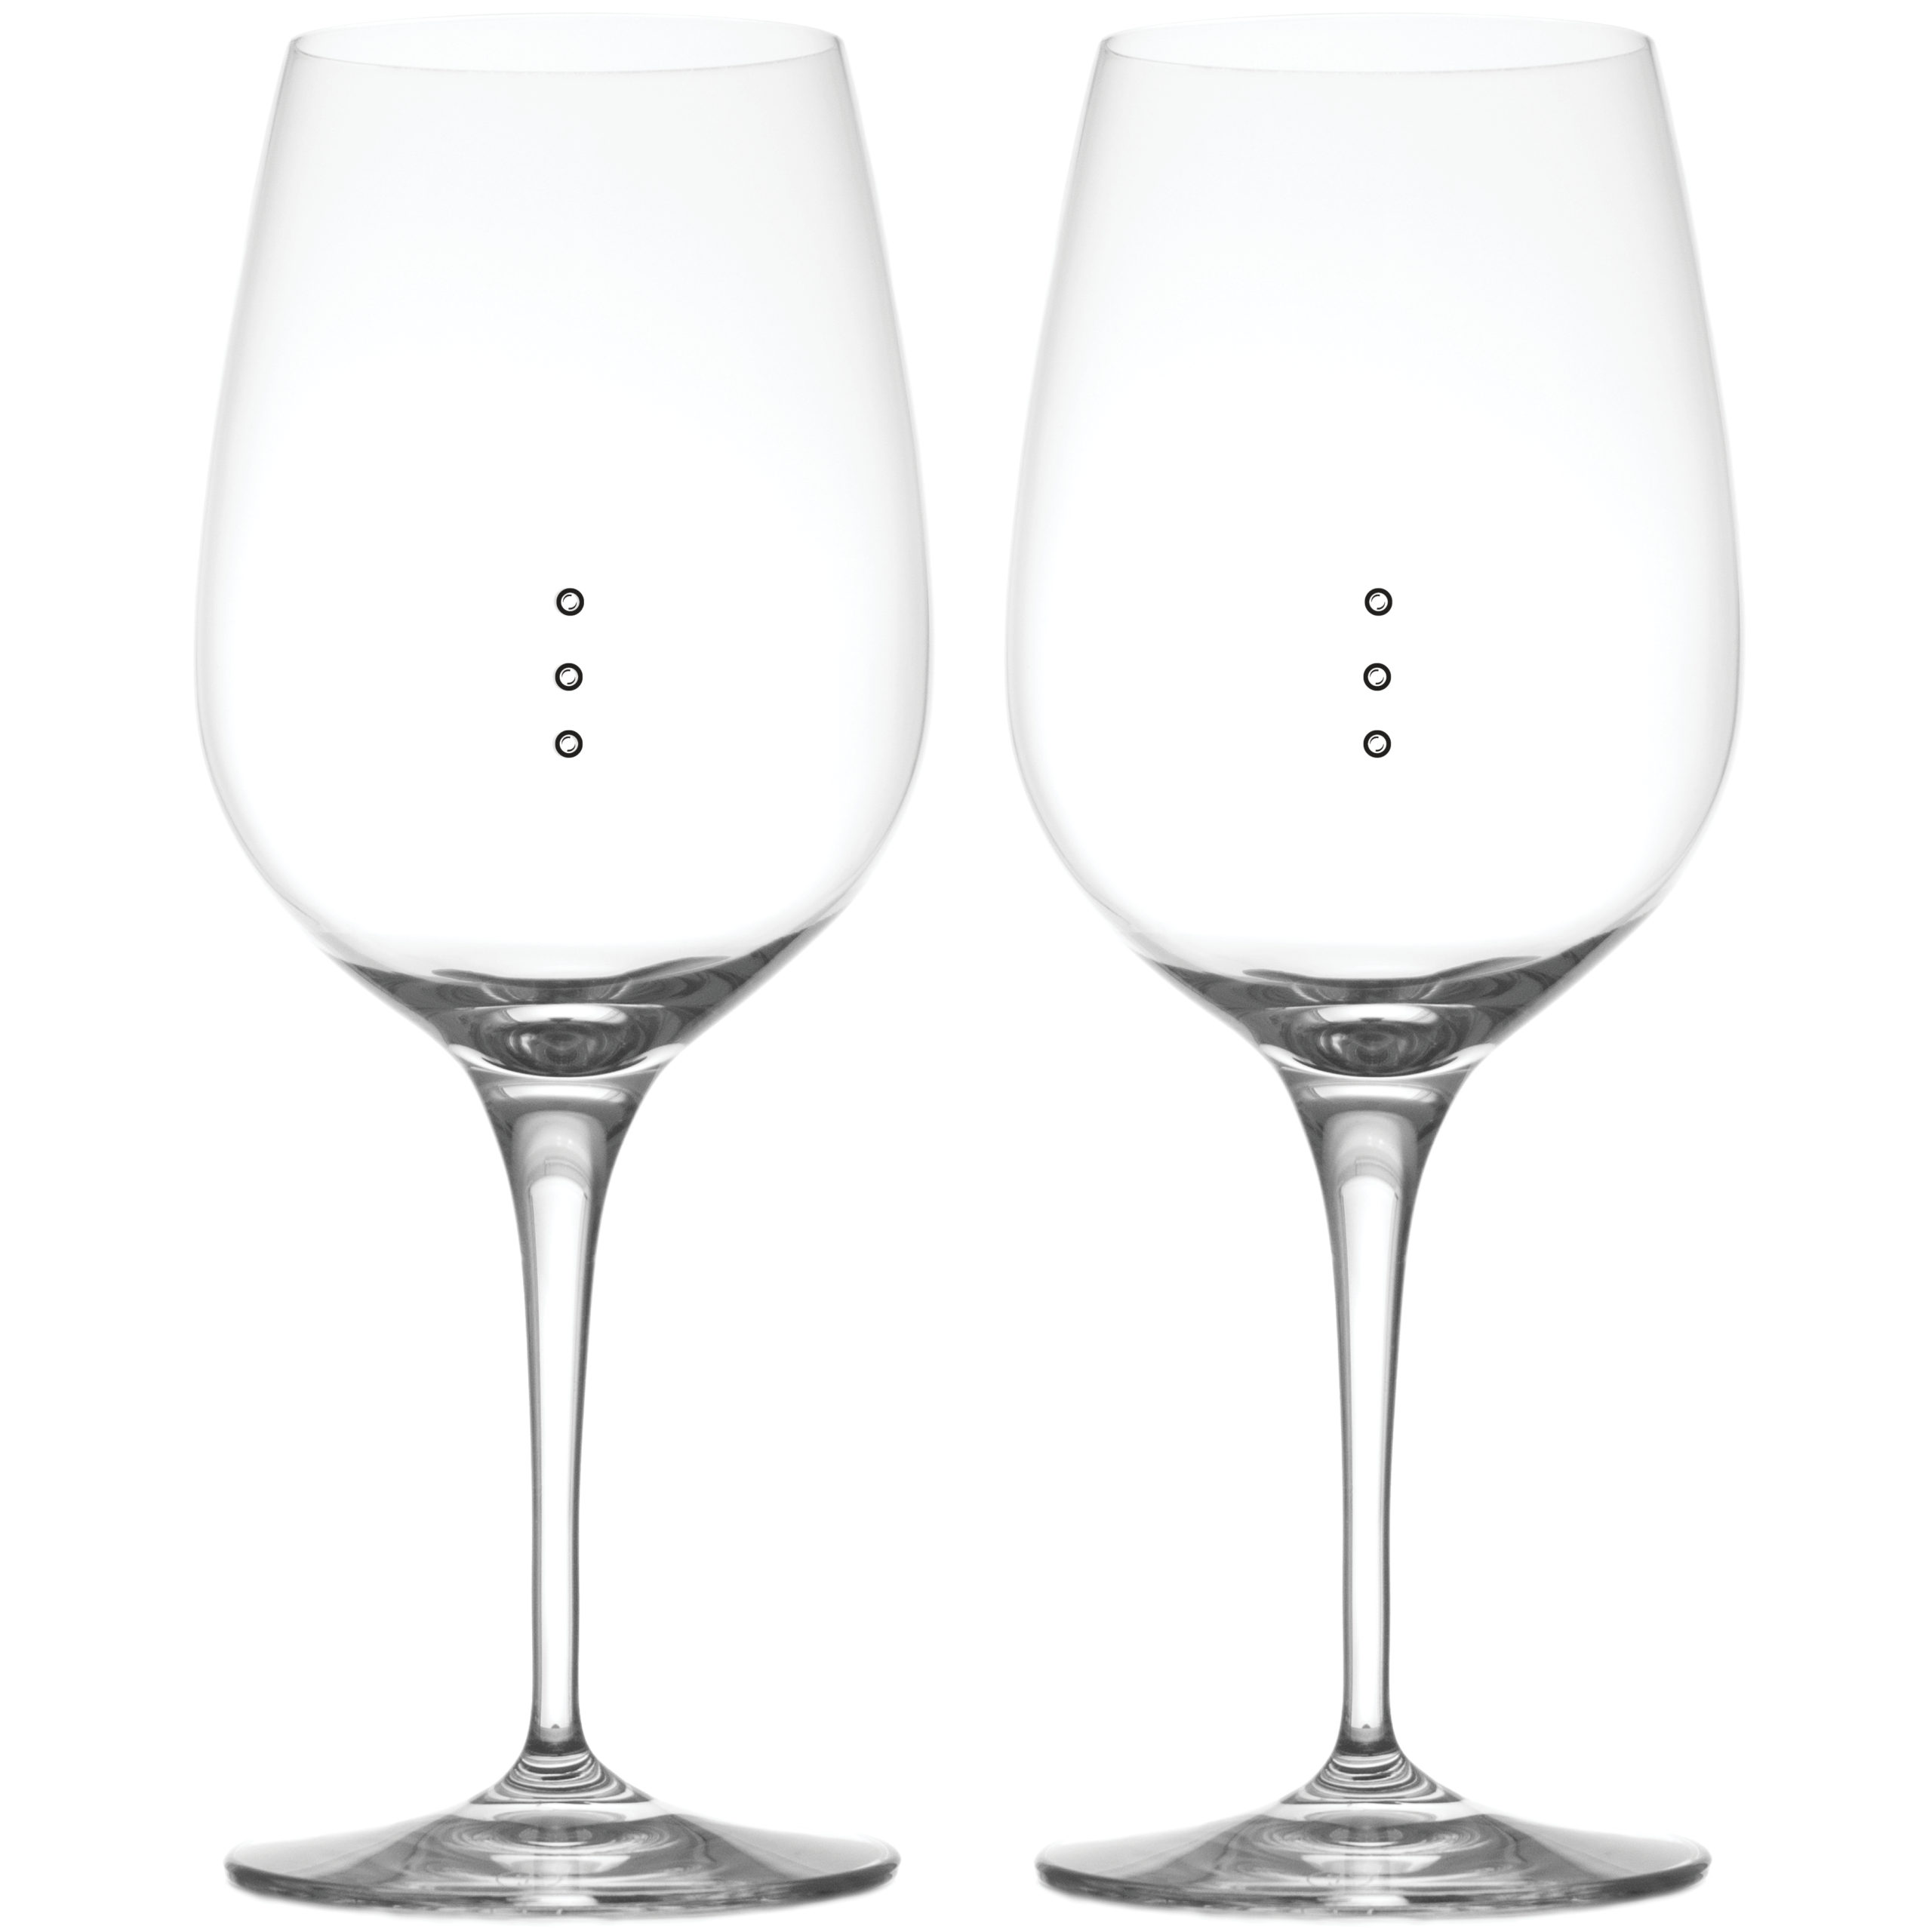 https://mr-picky.com/wp-content/uploads/2015/11/XL-Elegance-Measuring-Wine-Glass-with-Black-Wine-Measuring-Marks-scaled.jpg